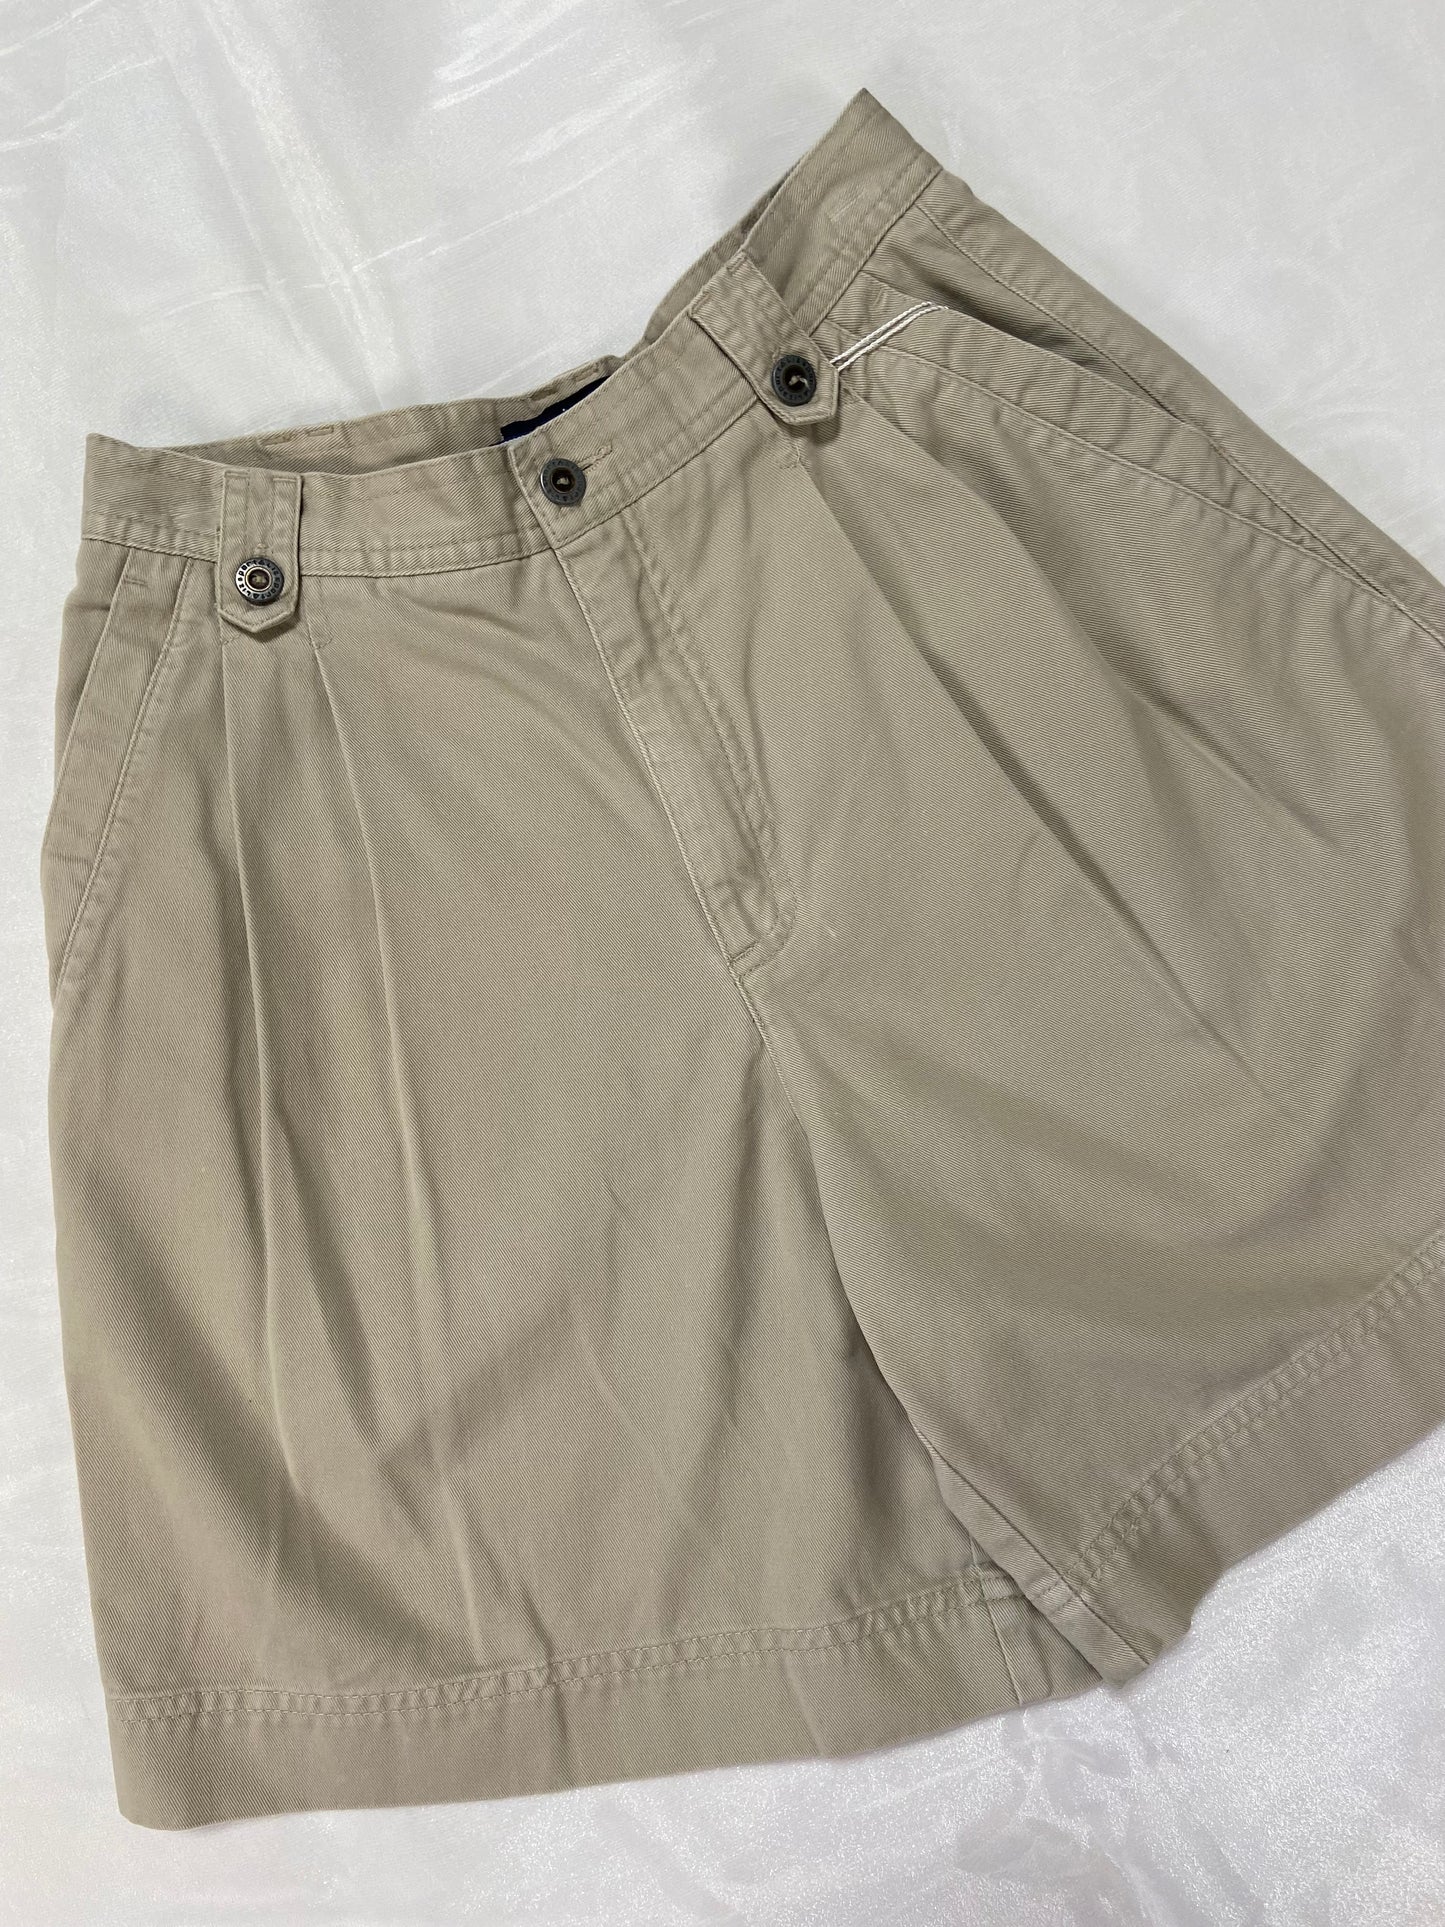 Khaki Pleated Shorts - 24”